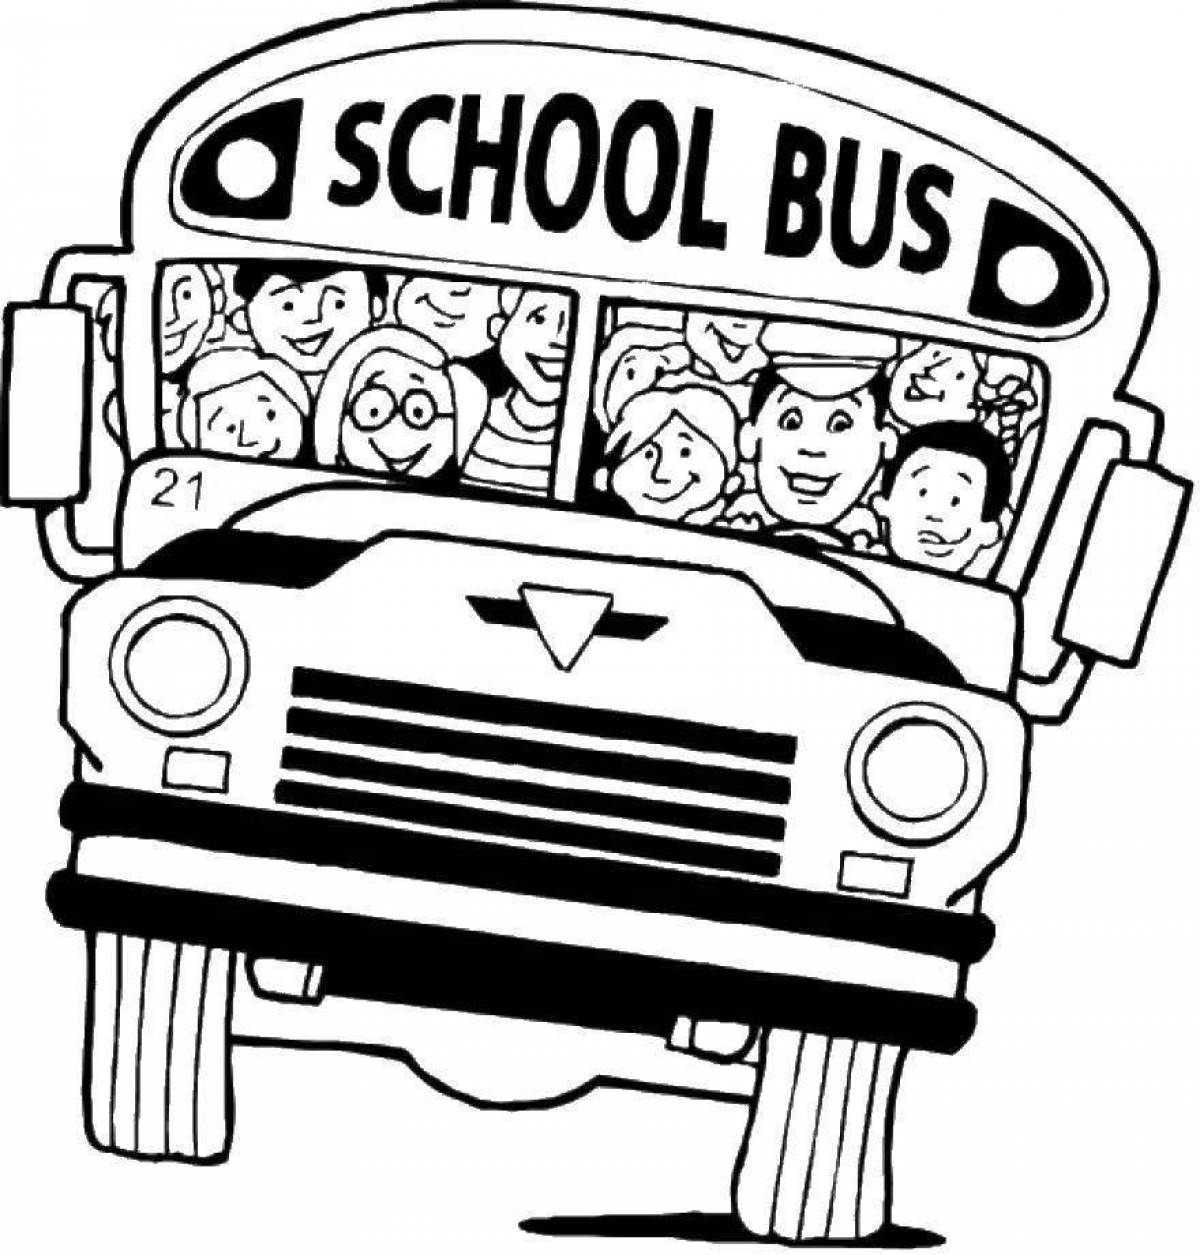 Radiant Gordon's school bus coloring page